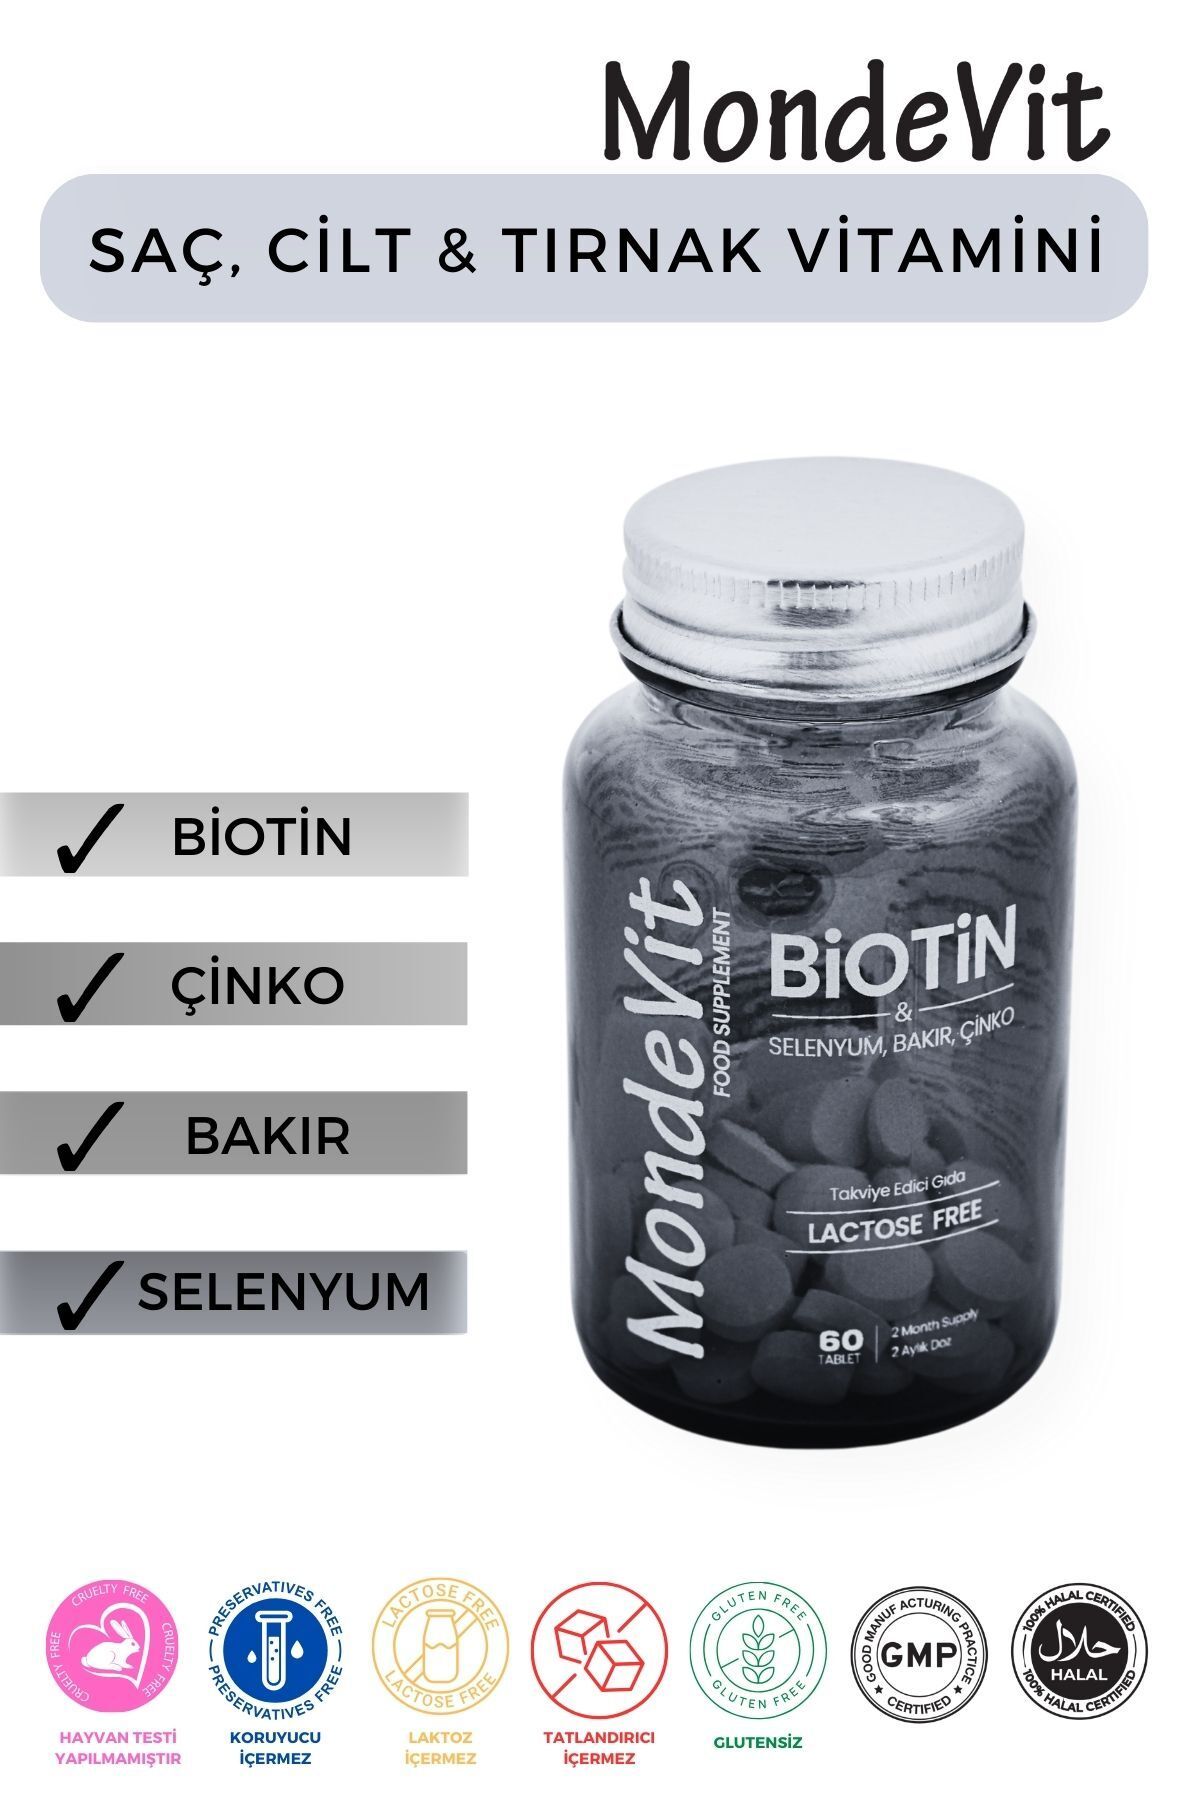 MondeVit Hair Vitamin 60 Tablet Biotin 5000 mcg-Çinko 15 mg-Bakır 2000 mcg-Selenyum 50 mcg